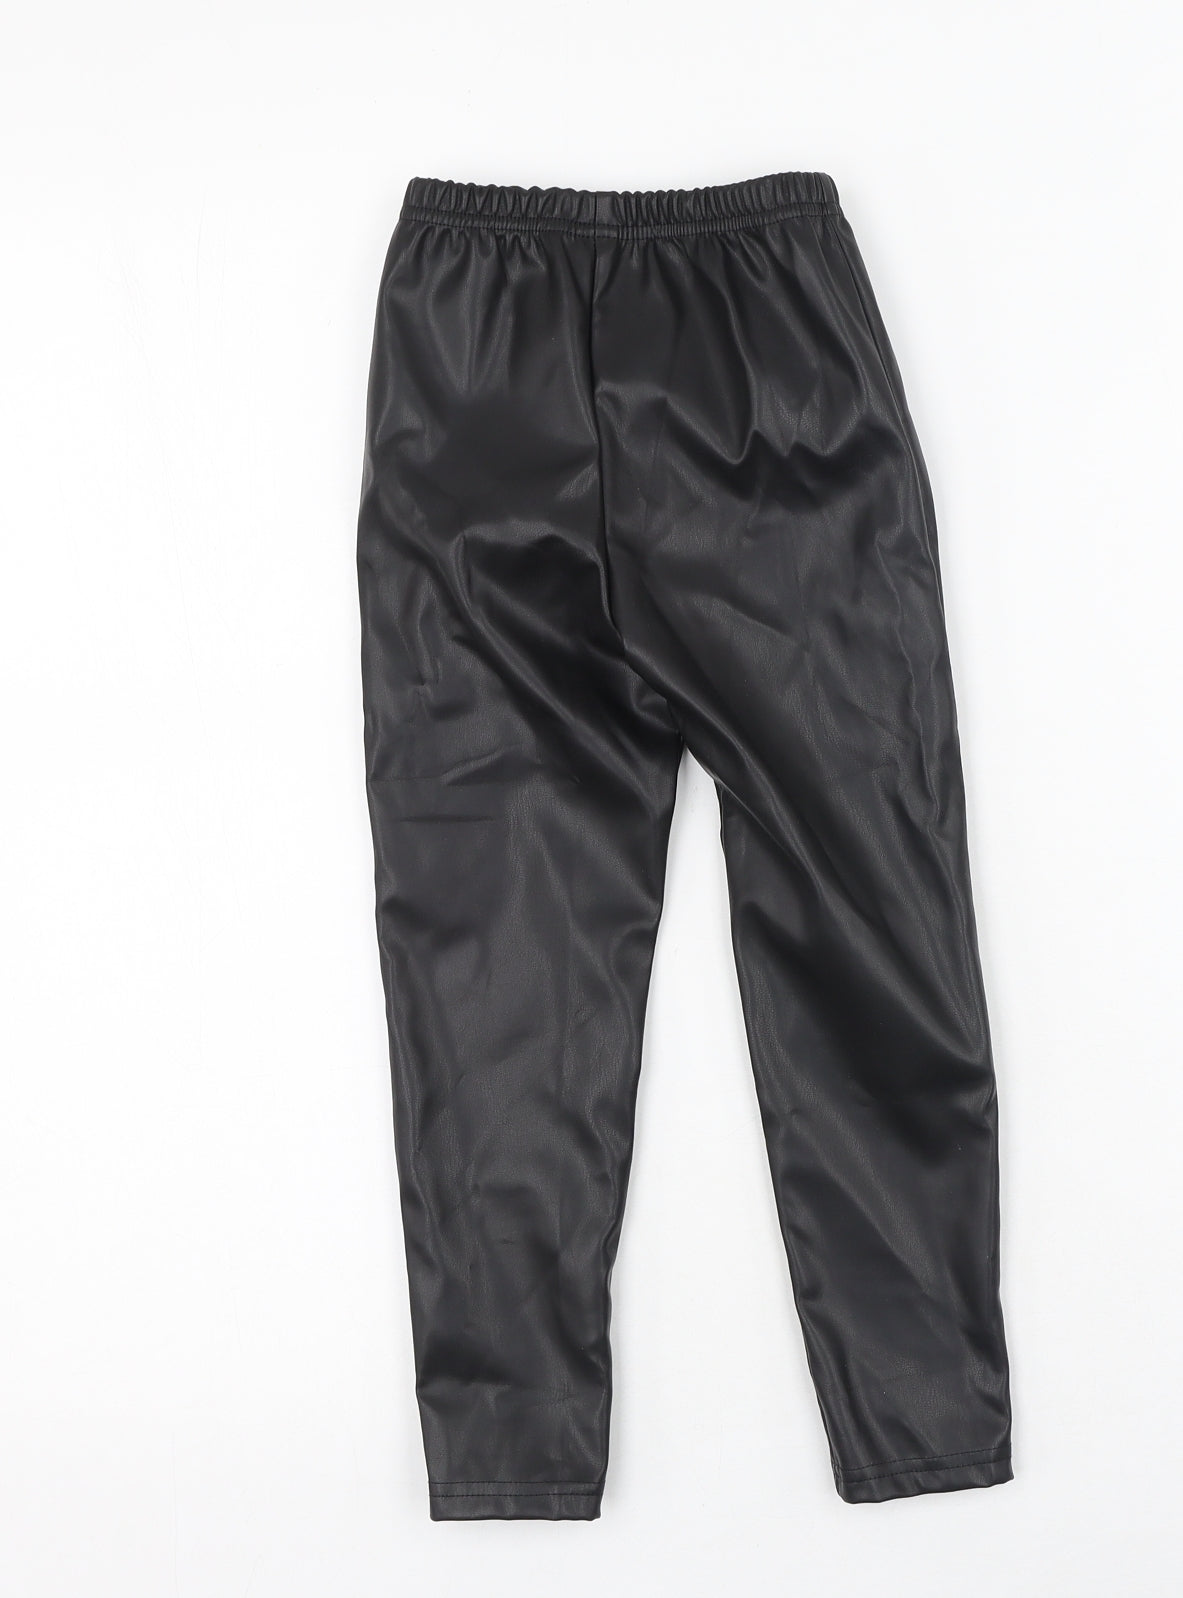 SheIn Girls Black  Polyester Jegging Trousers Size 4 Years  Regular